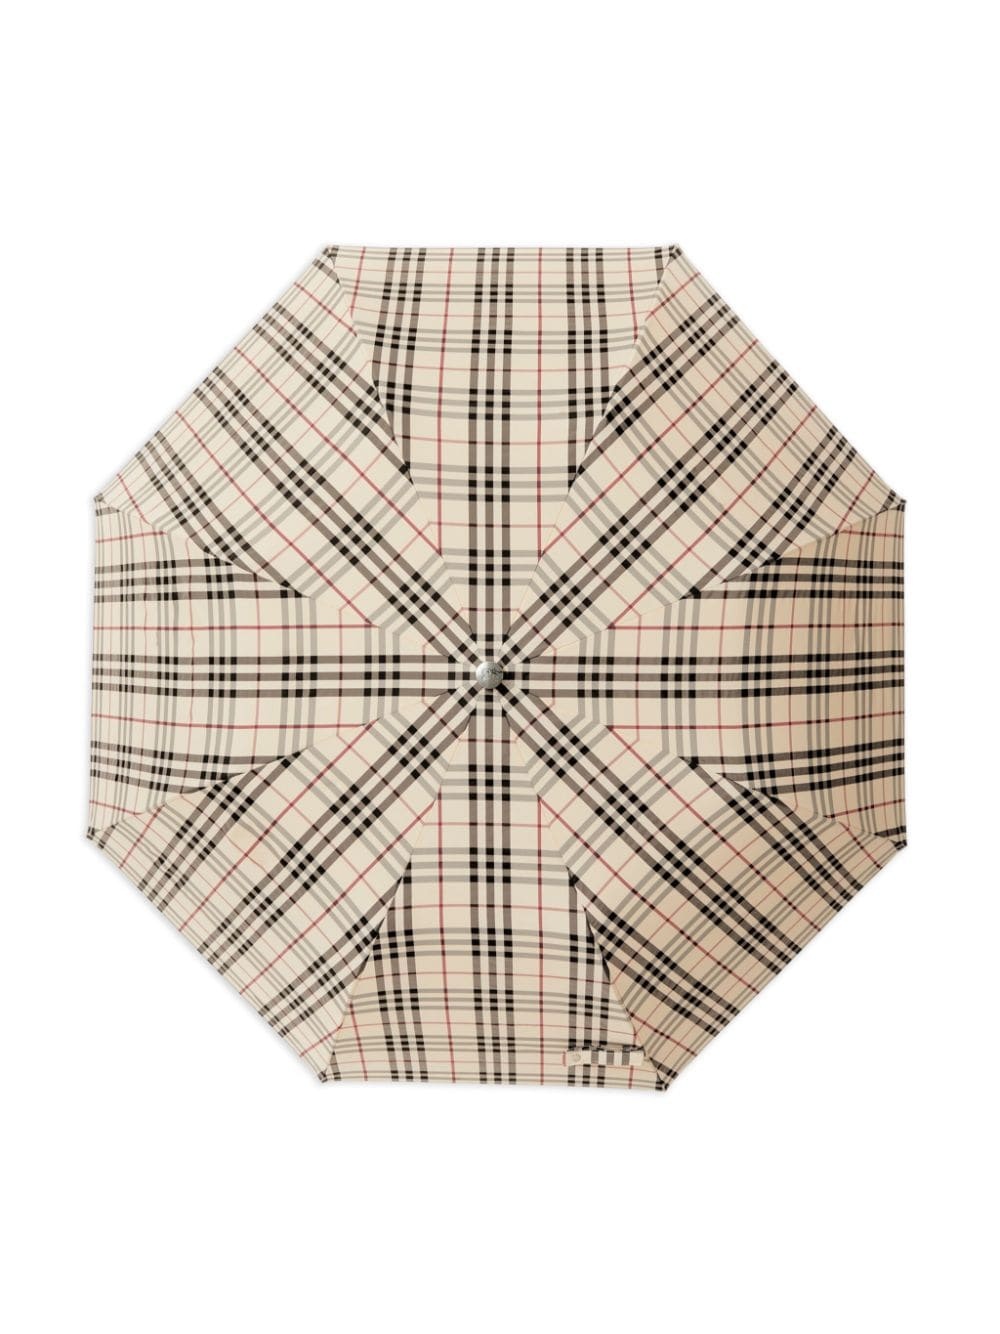 Vintage-Check folding umbrella - 2